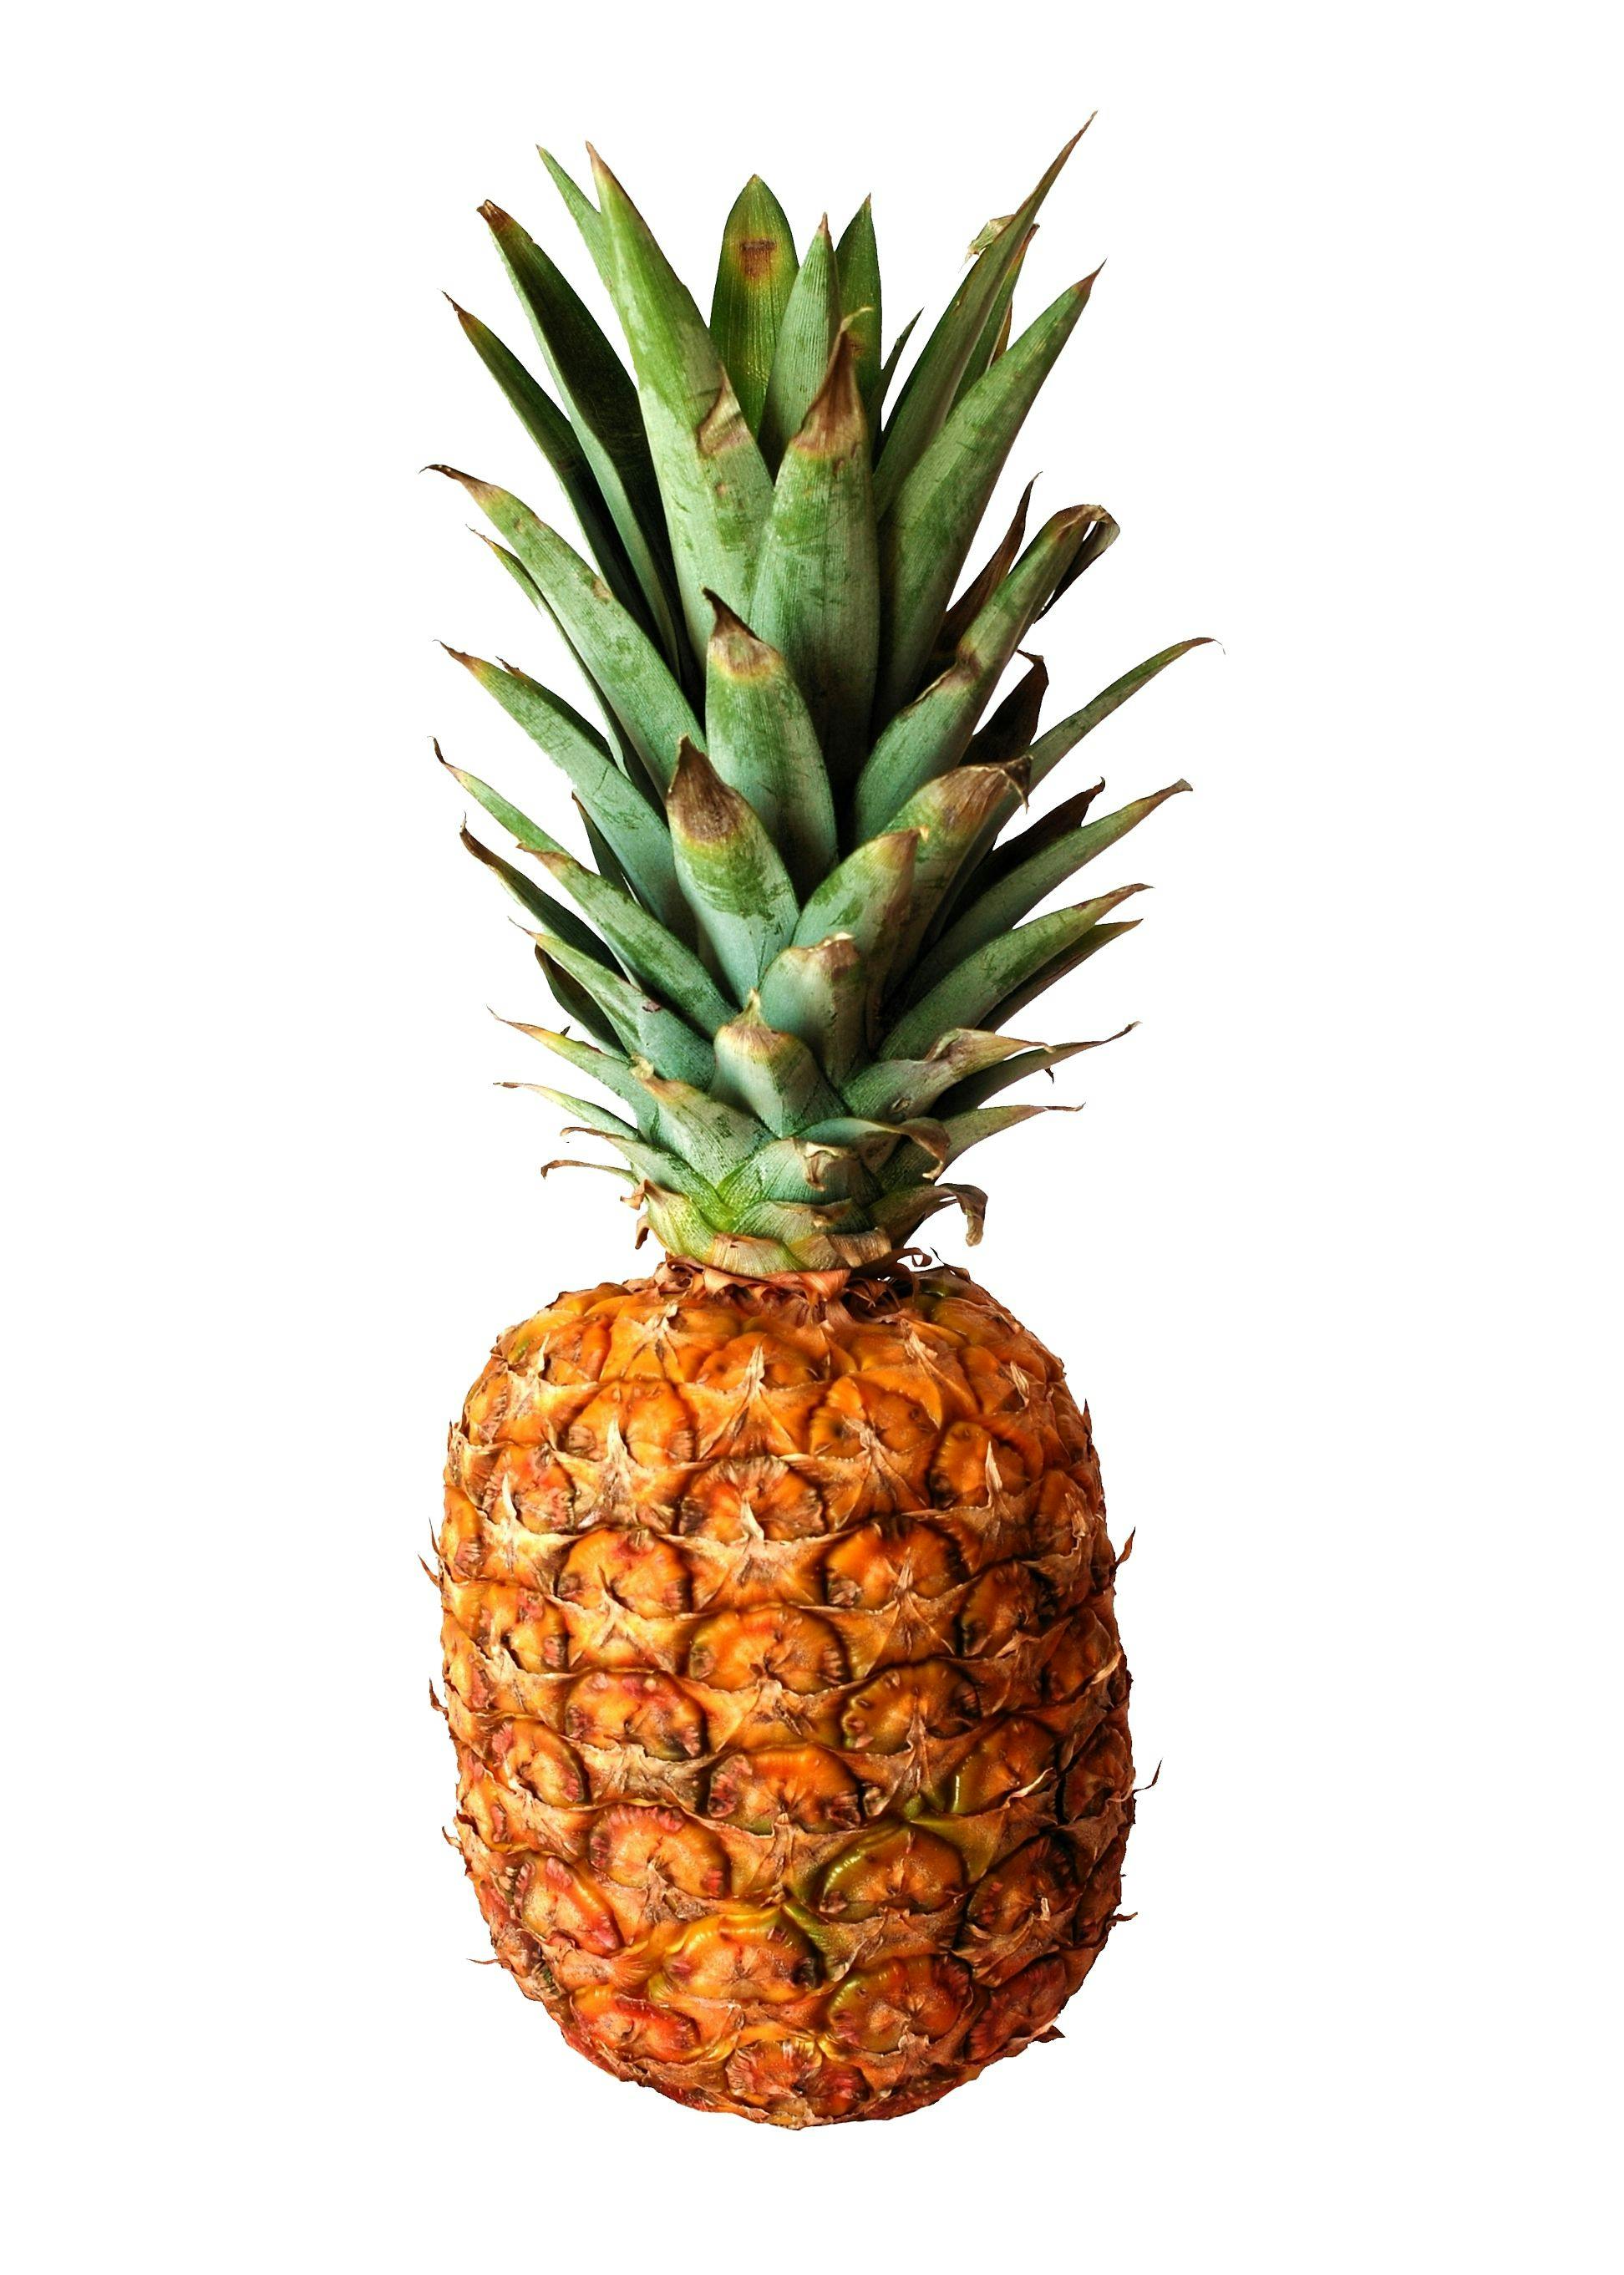 Fun Fact: Pineapples